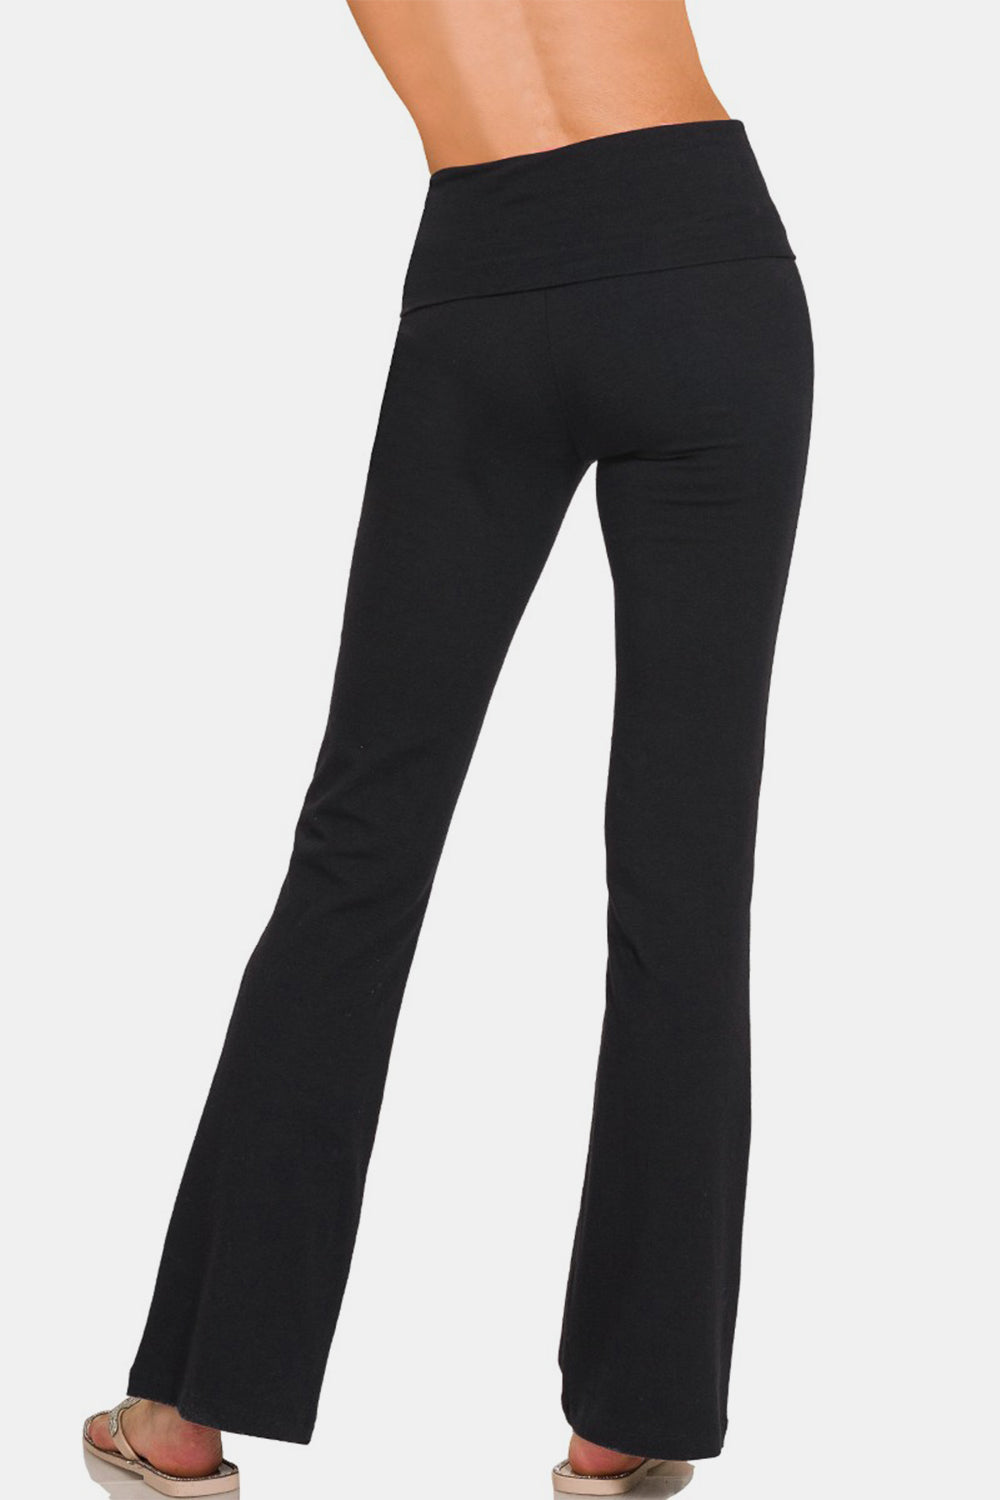 Slim-fit black yoga pants with a flared leg